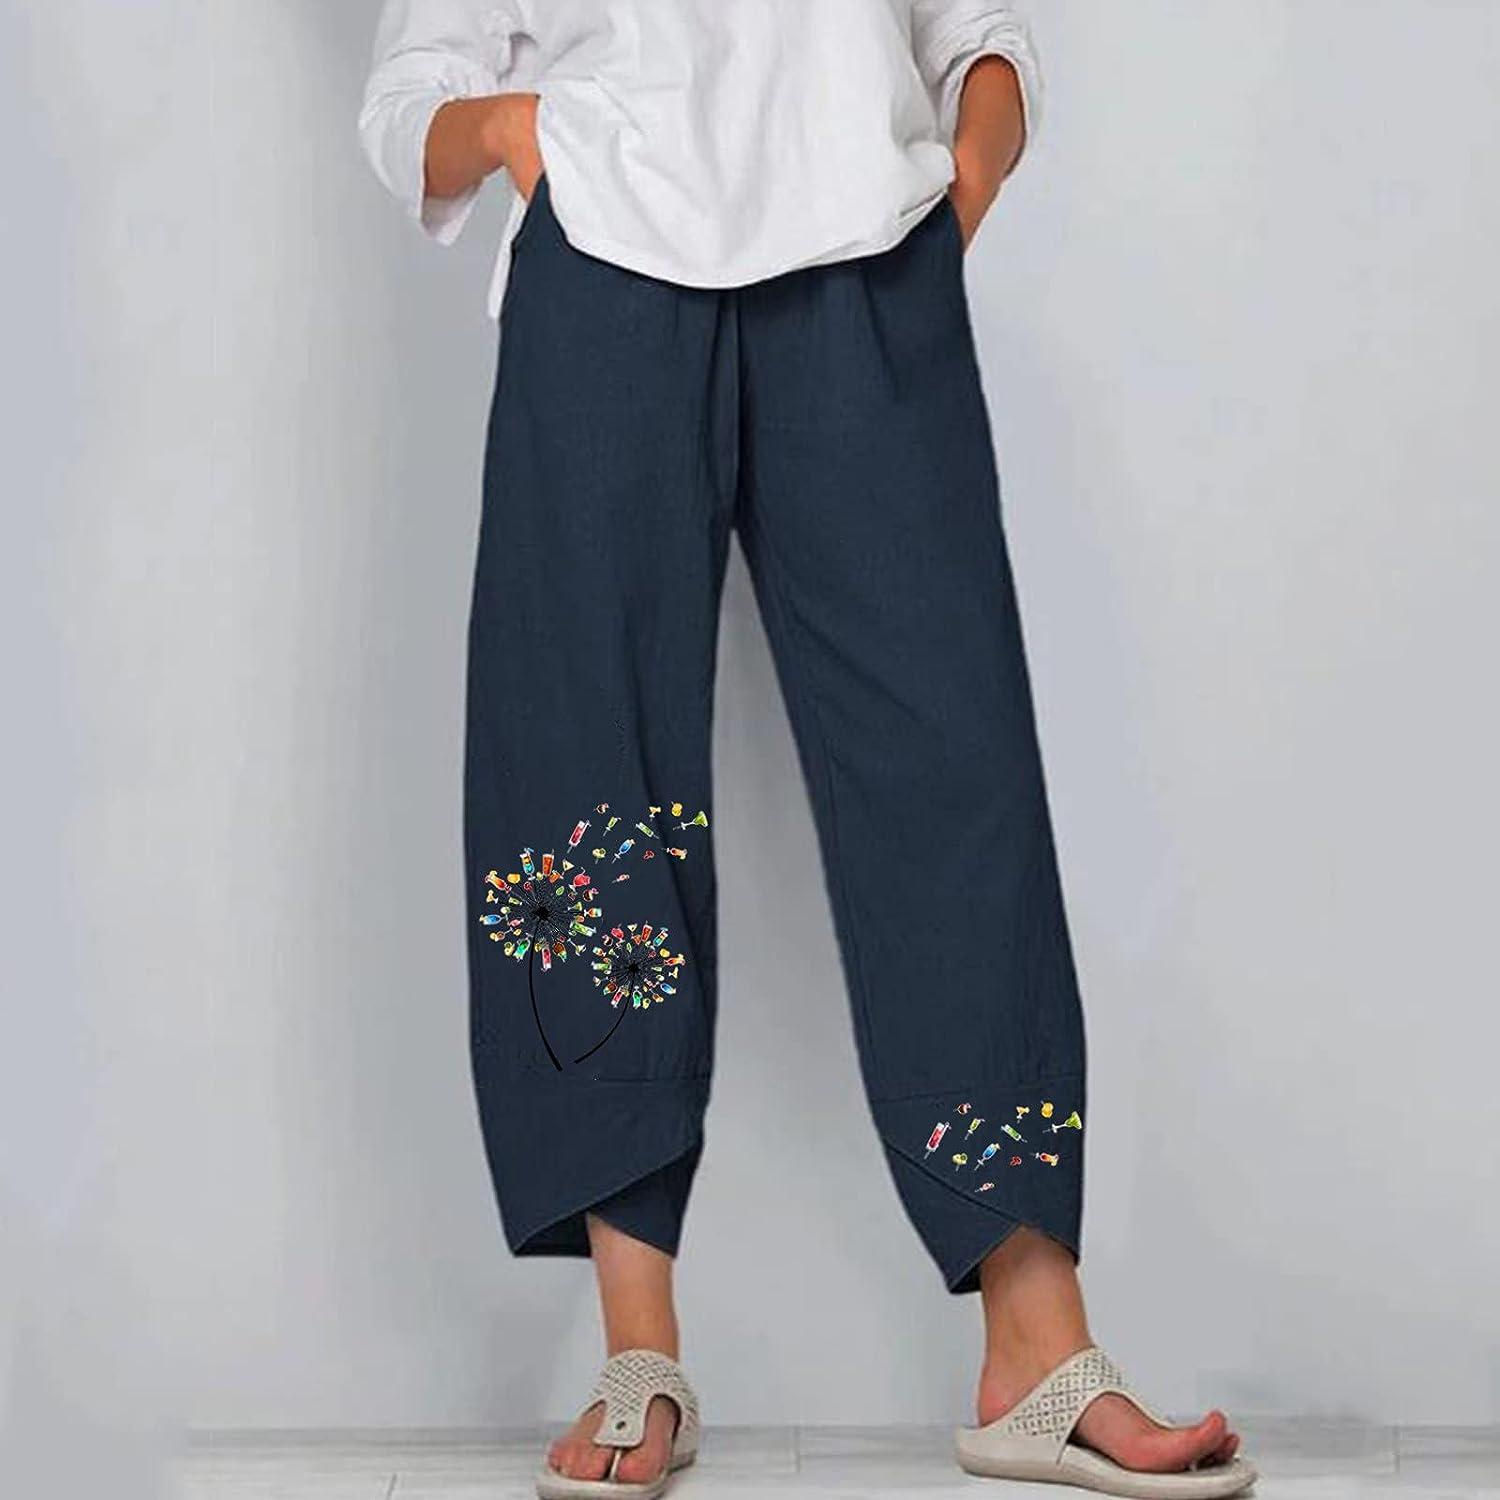 MALAIDOG Womens Cotton Linen Beach Lounge Pants Summer Casual